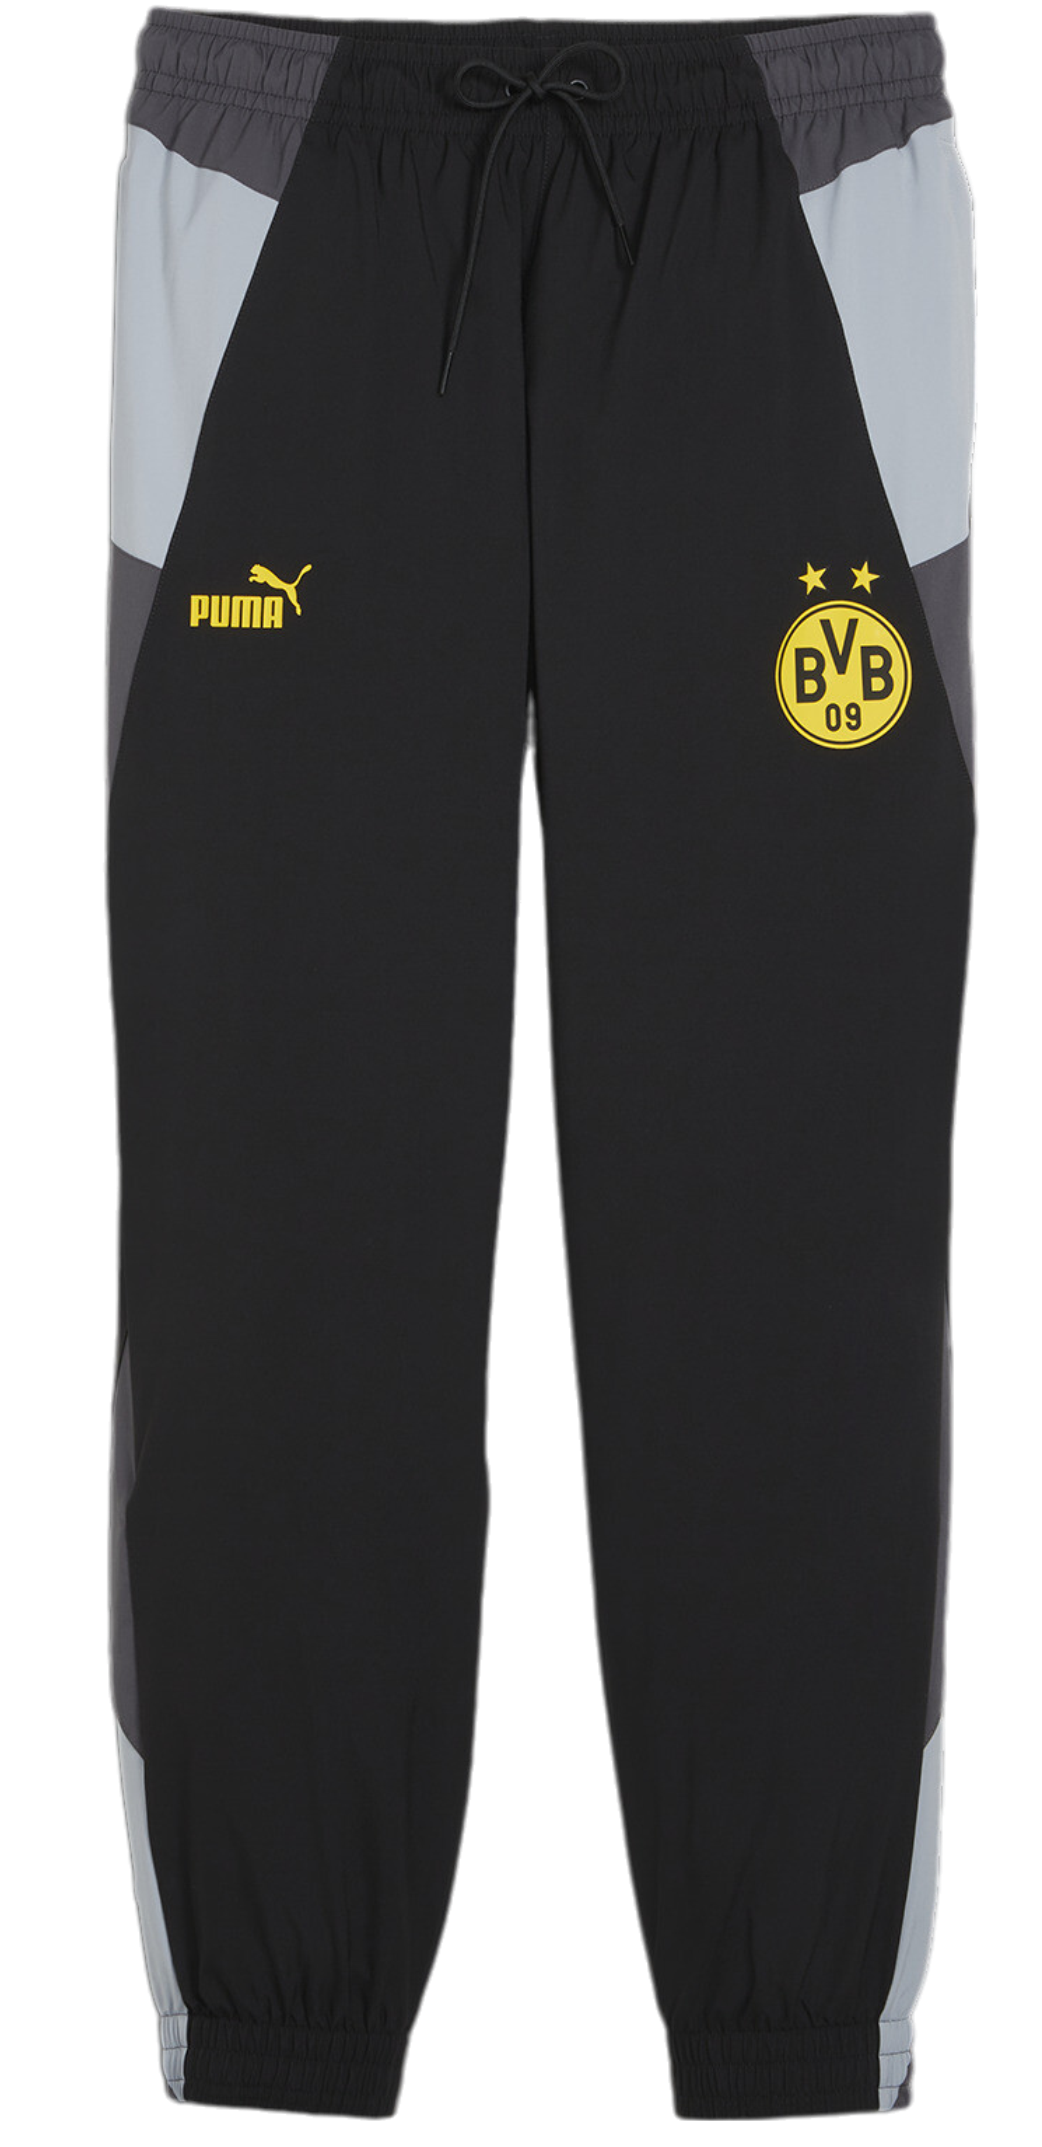 Puma BVB Woven Pants